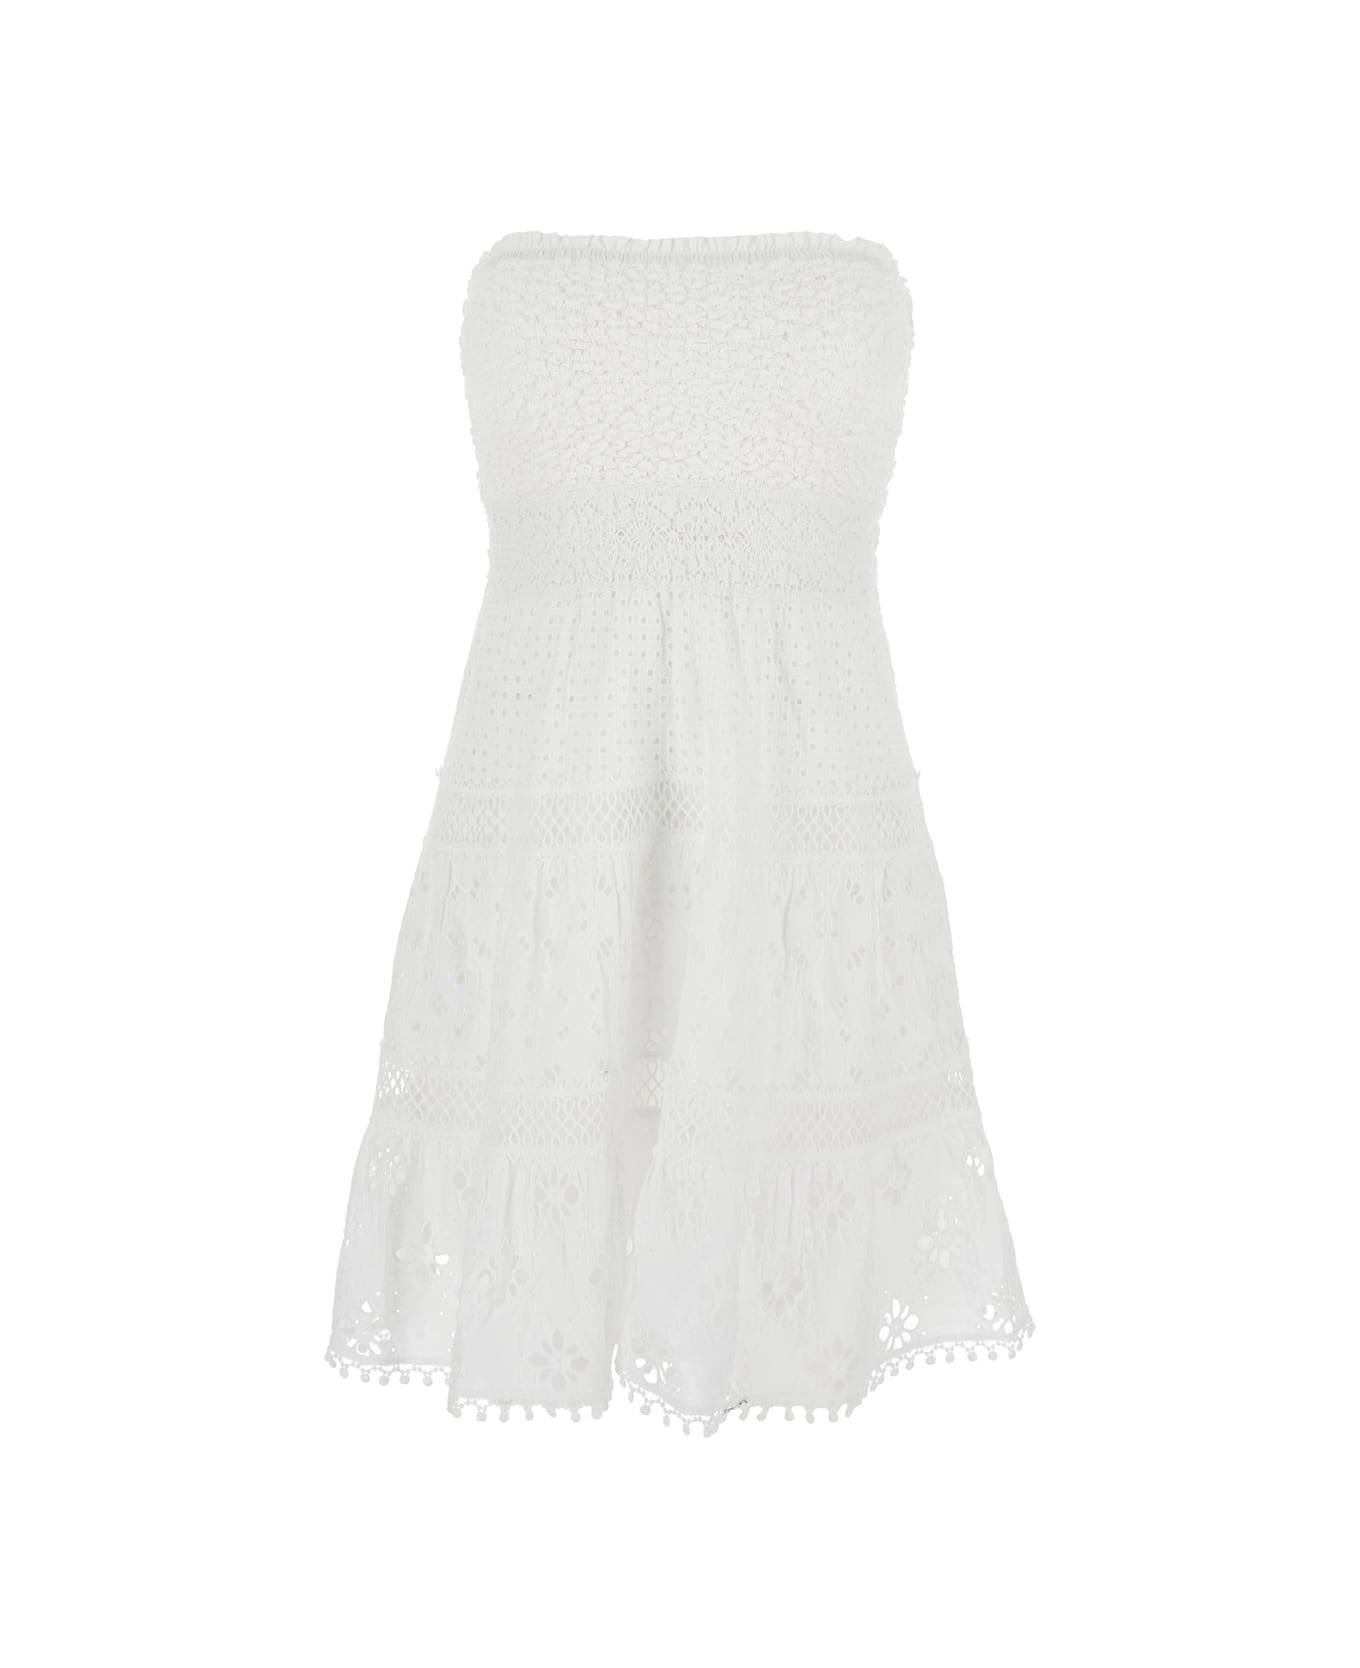 Temptation Positano White Short Embroidered Dress In Cotton Woman - White